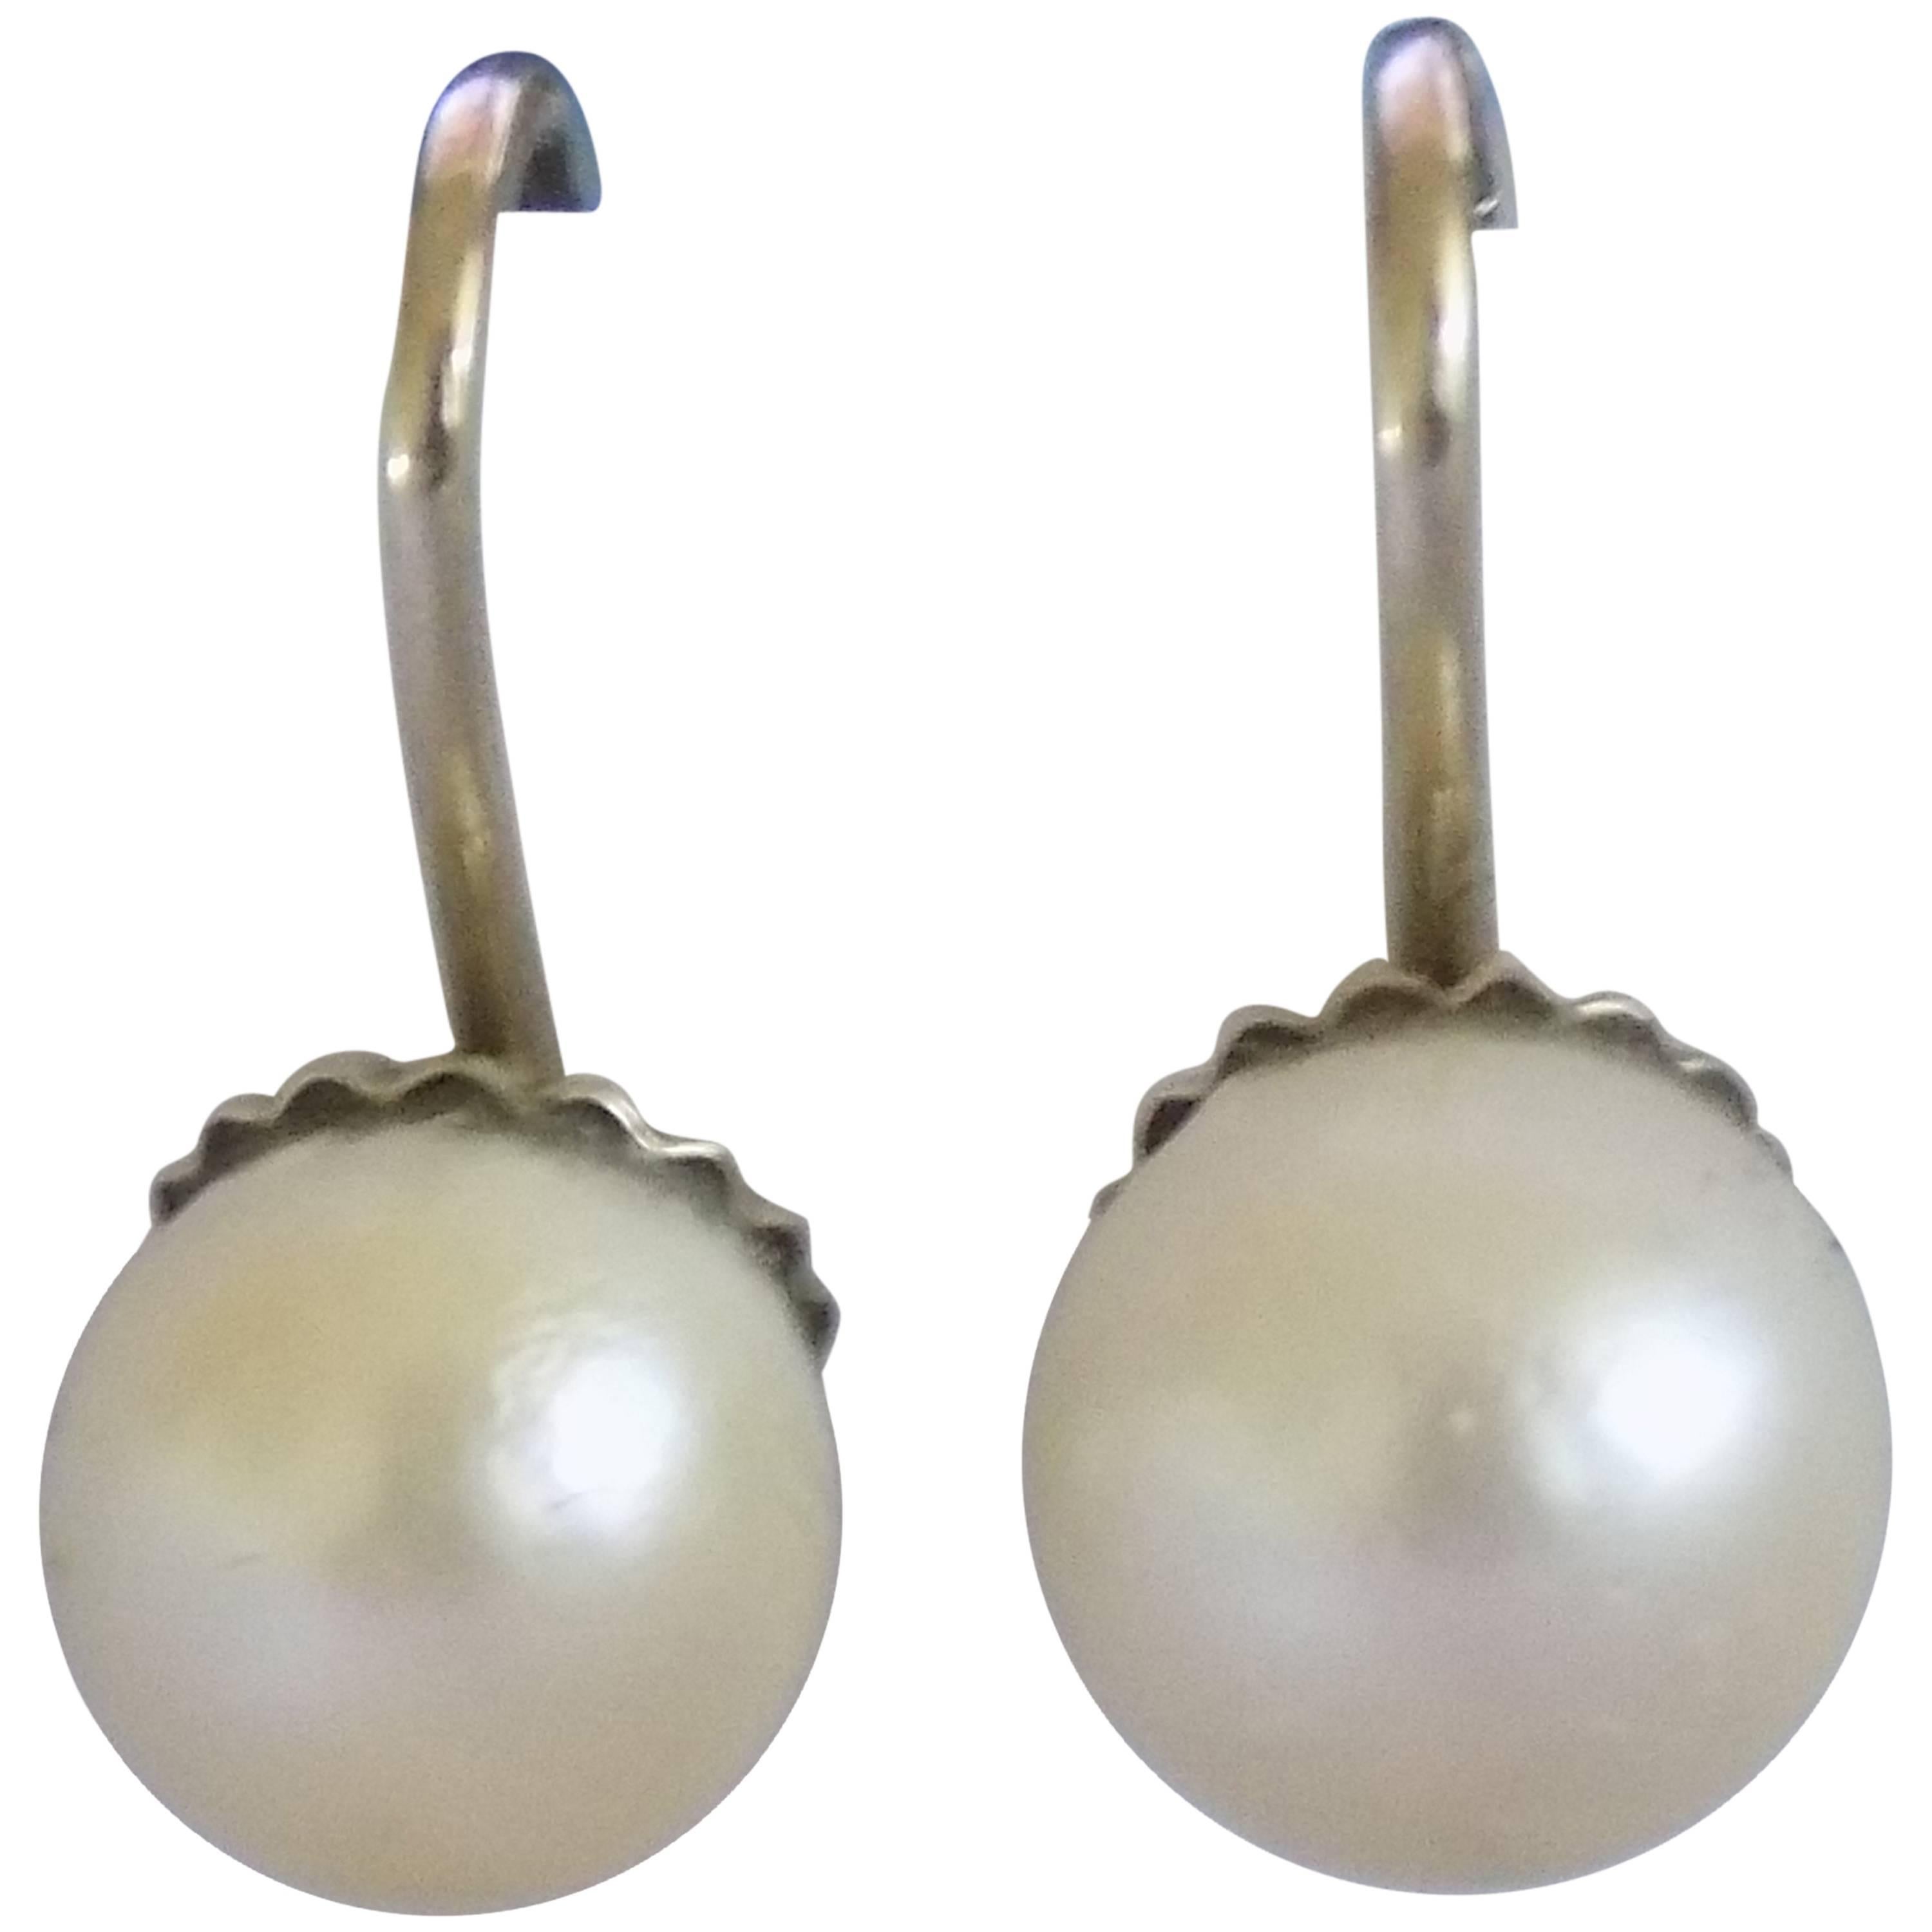 Boucles d'oreilles perles or 18 carats